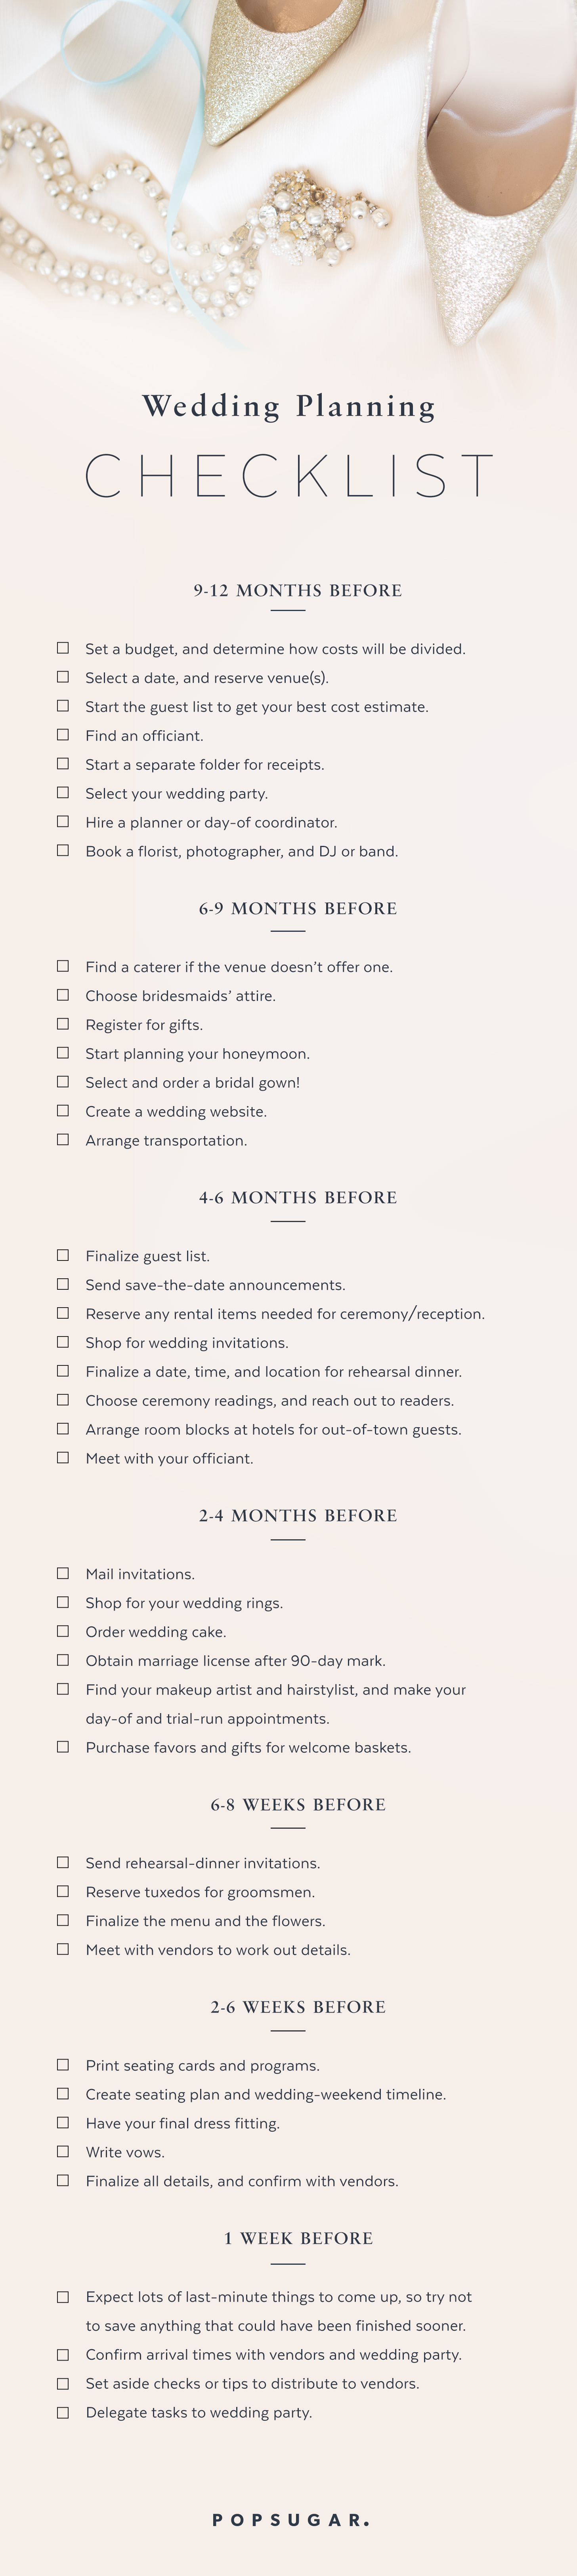 wedding-planning-checklist-popsugar-smart-living-uk